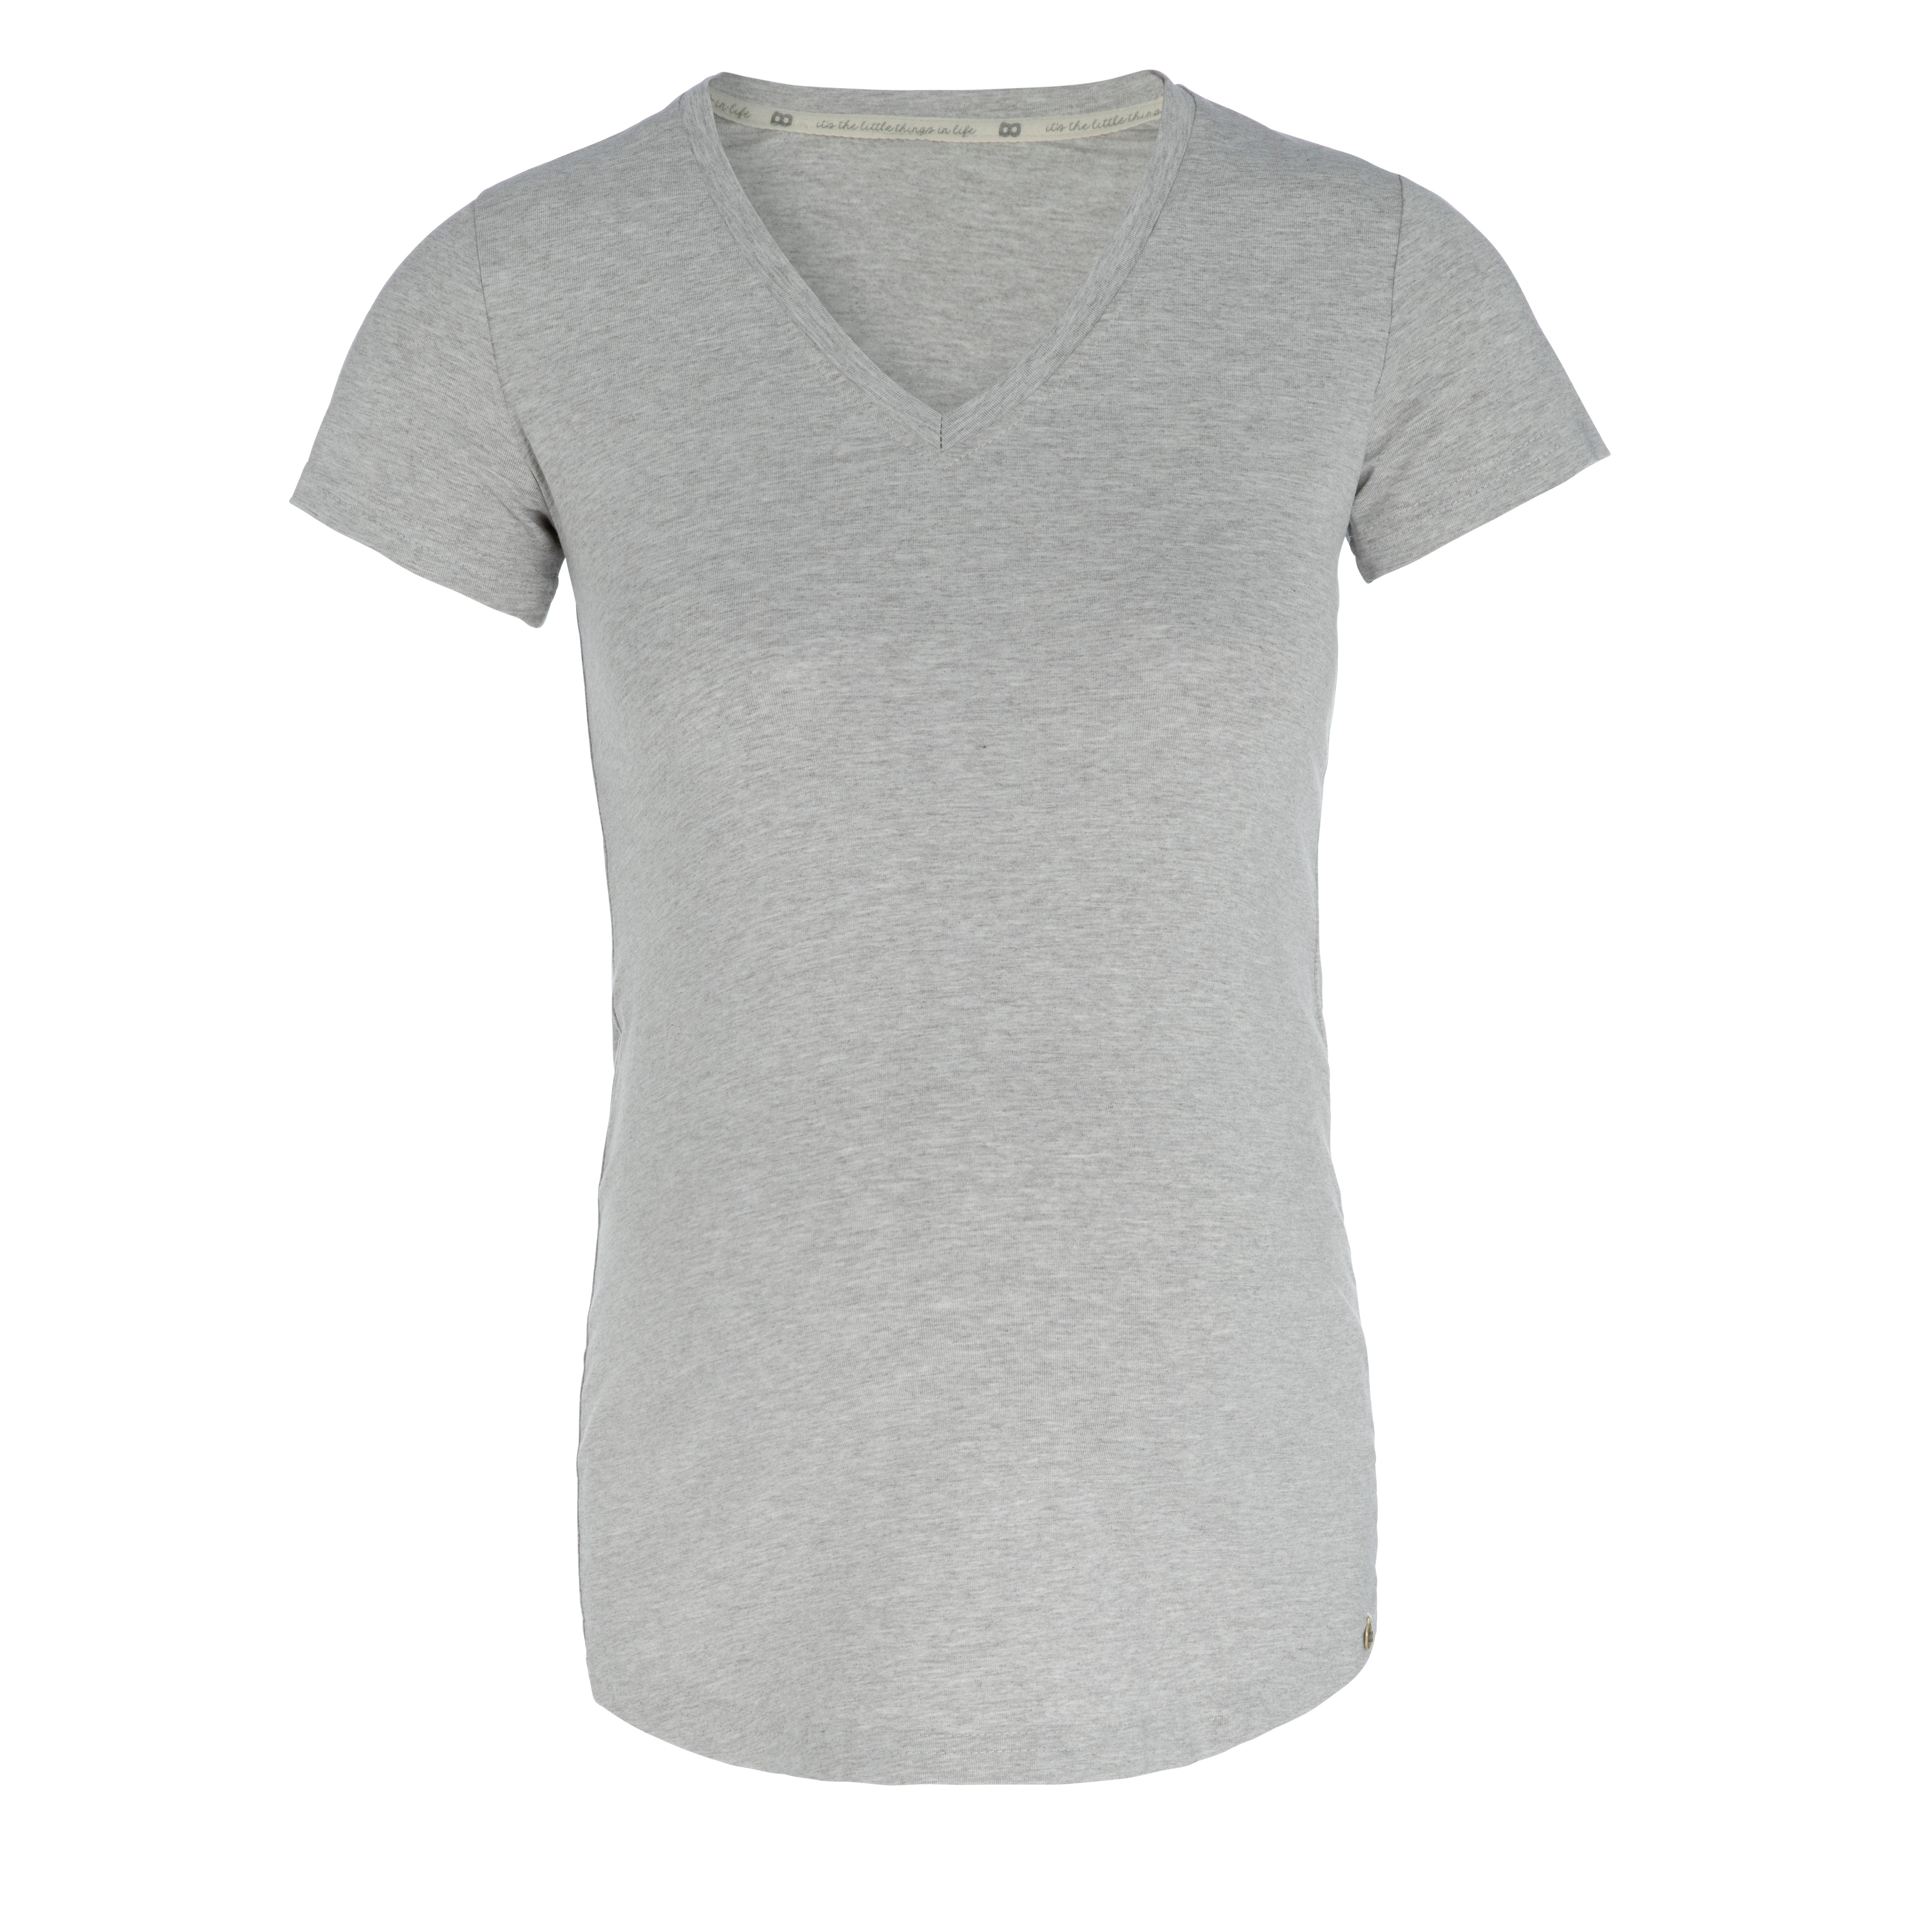 Maternity T-shirt Glow dusty grey - S